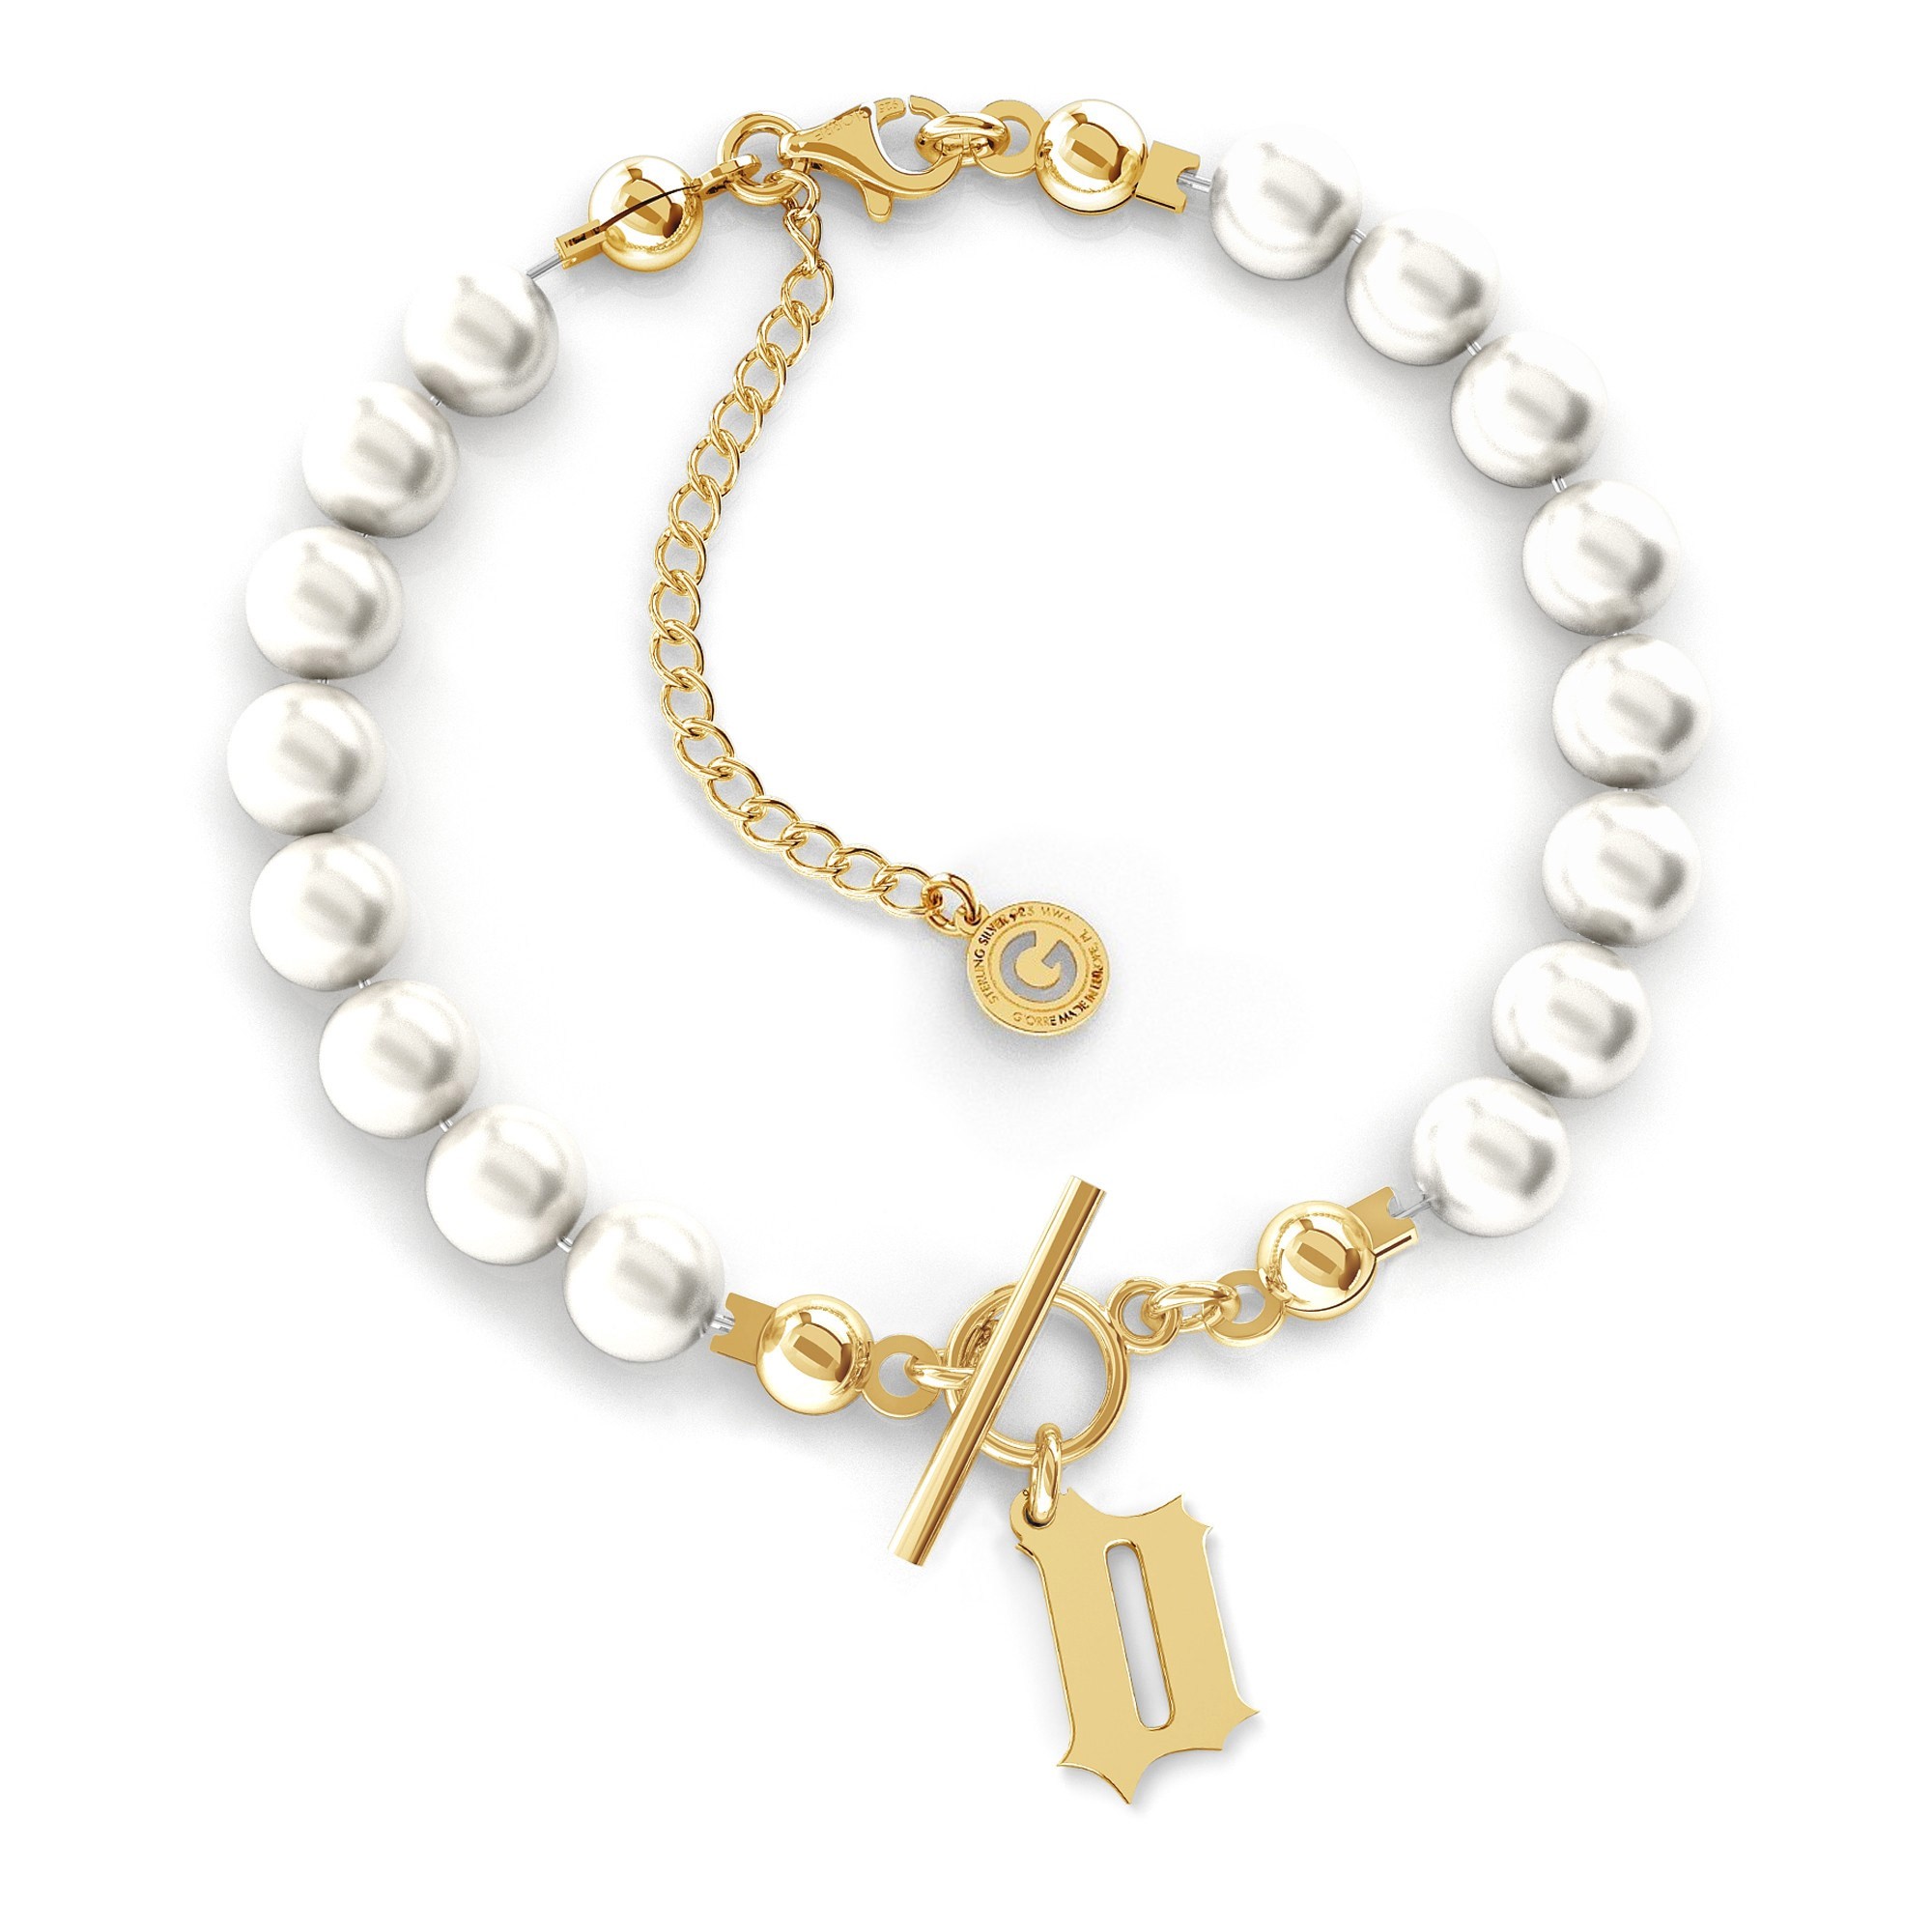 Perlen armband mit brief T°ra'vel'' sterling silber 925